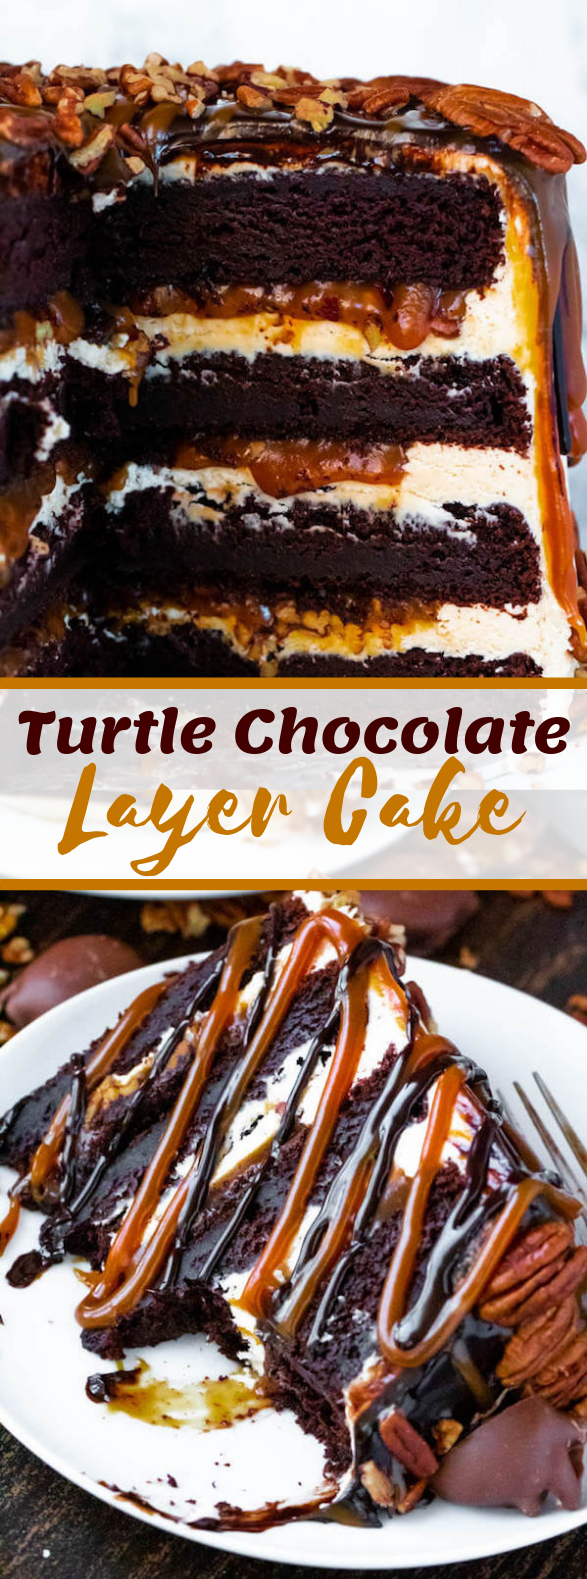 TURTLE CHOCOLATE LAYER CAKE #dessert #caramel #cake #chocolate #sweets